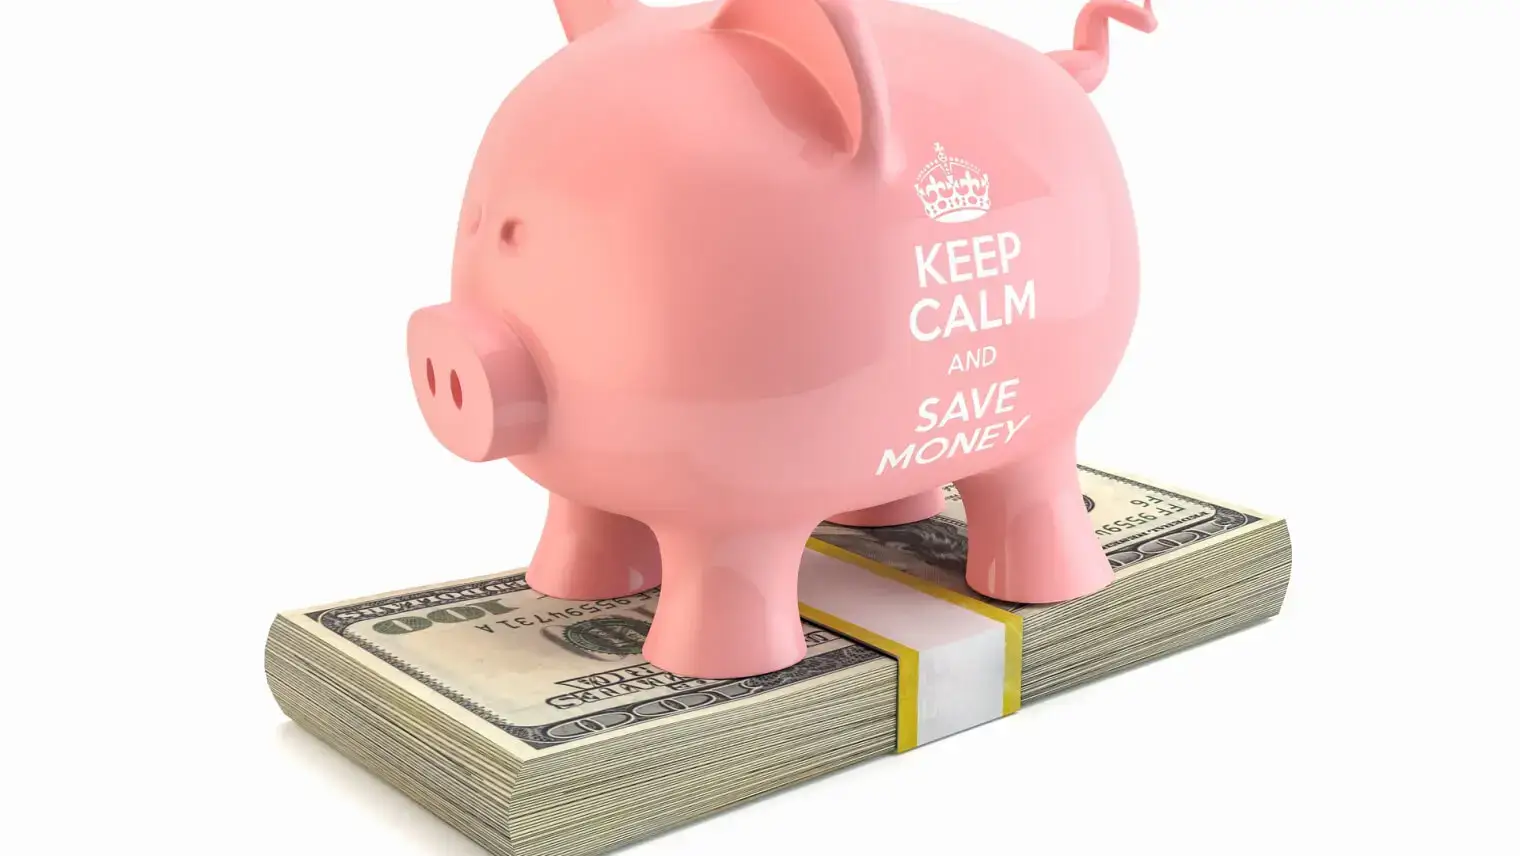 Save money - Belongings